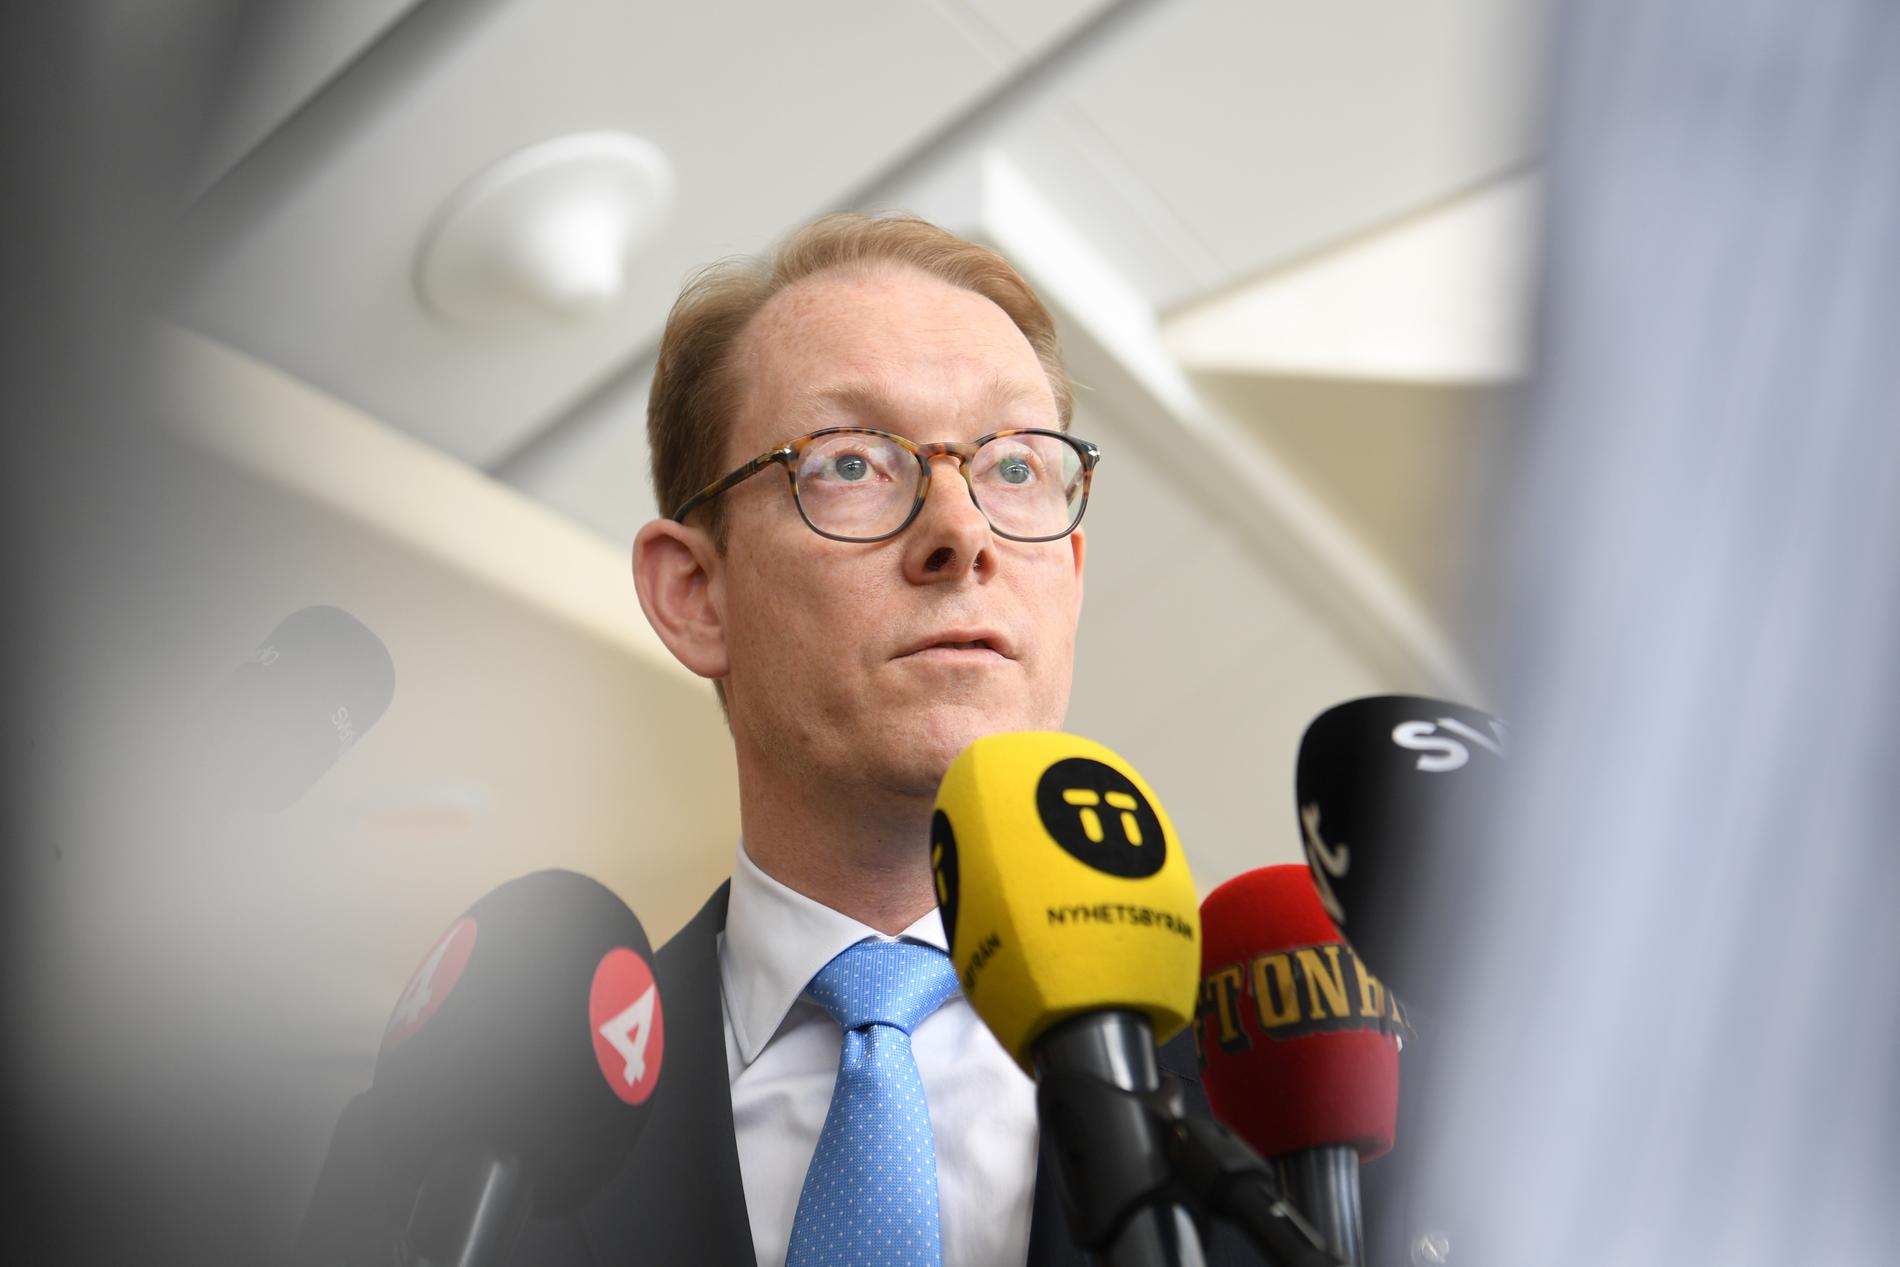 Utrikesminister Tobias Billström.